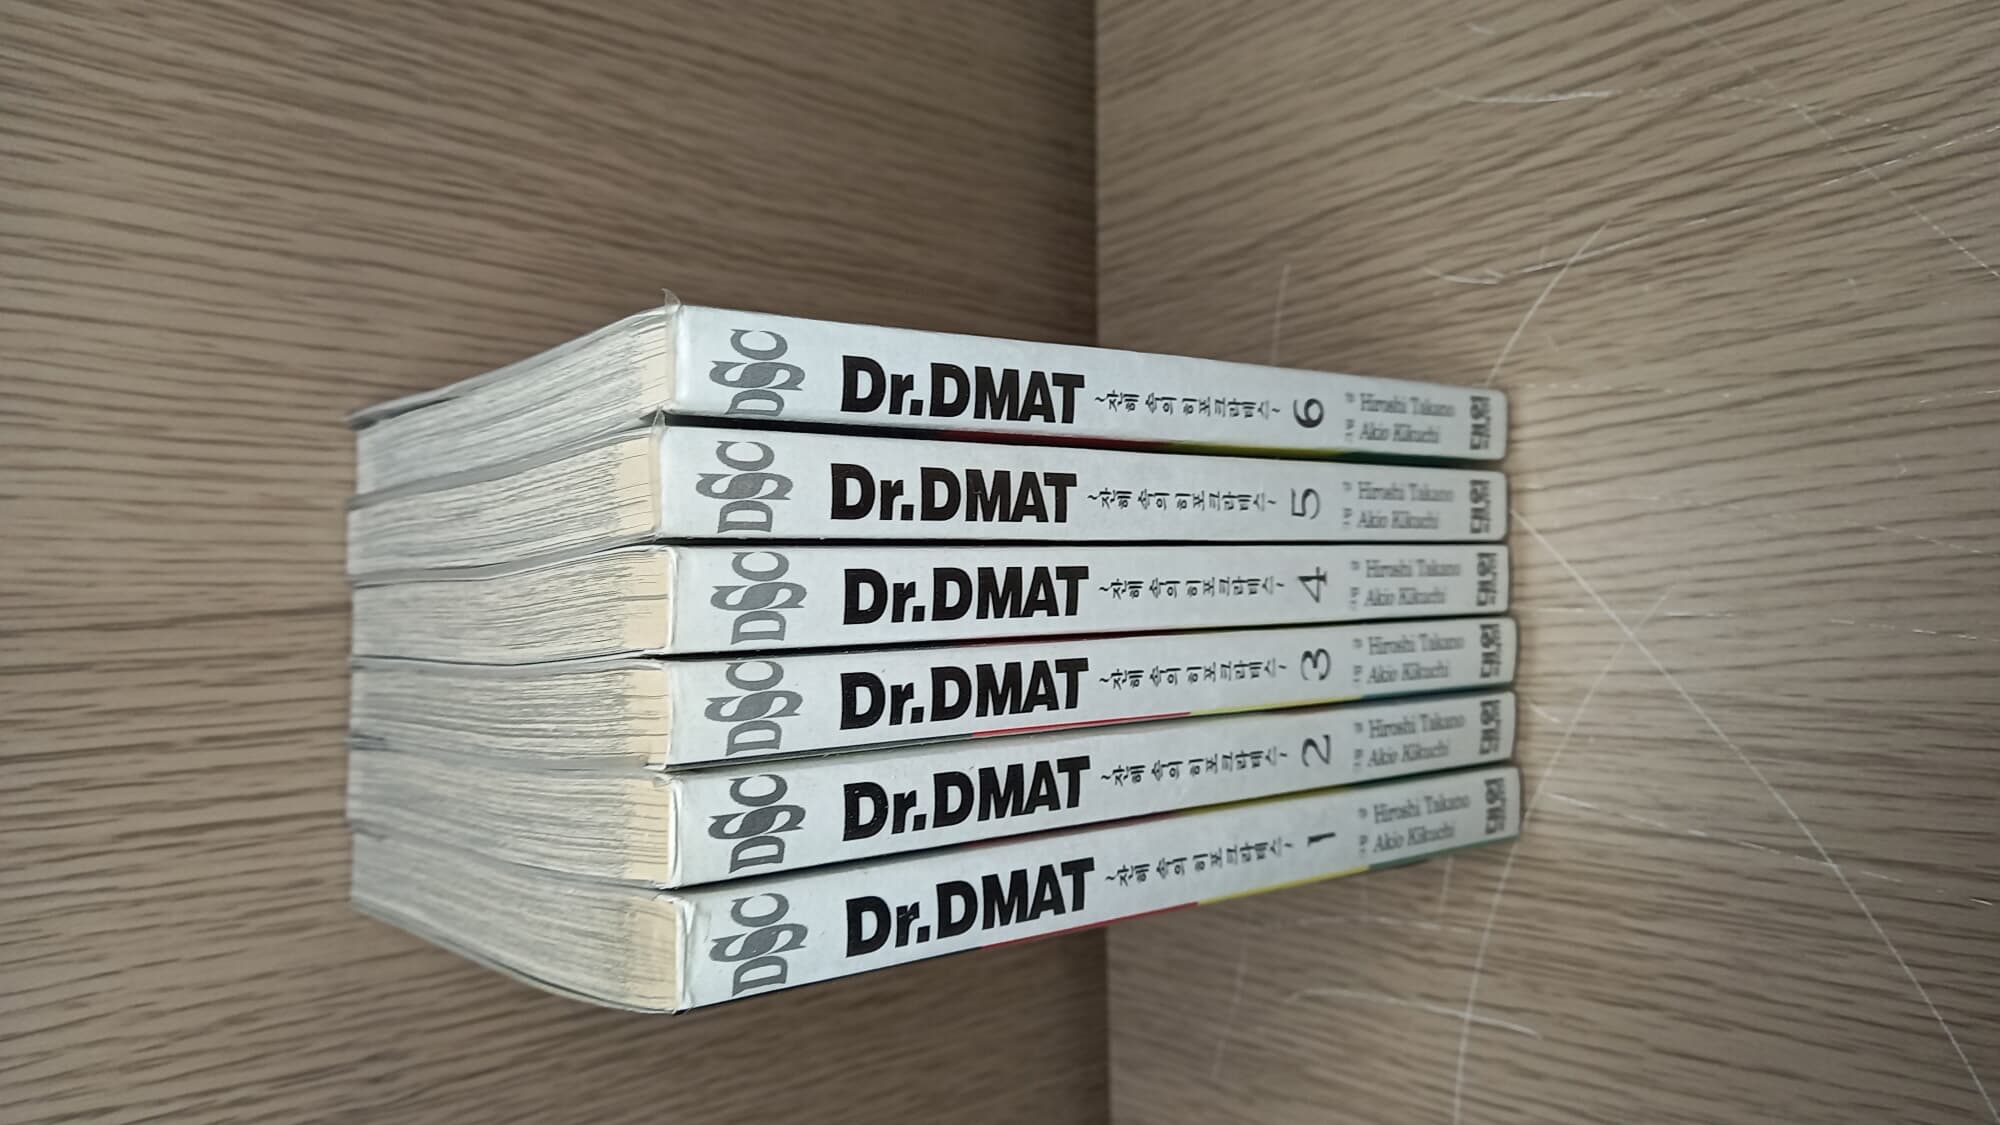 Dr. DMAT 잔해속의히포크라테스(1~6) > 가족만화>실사진 참조